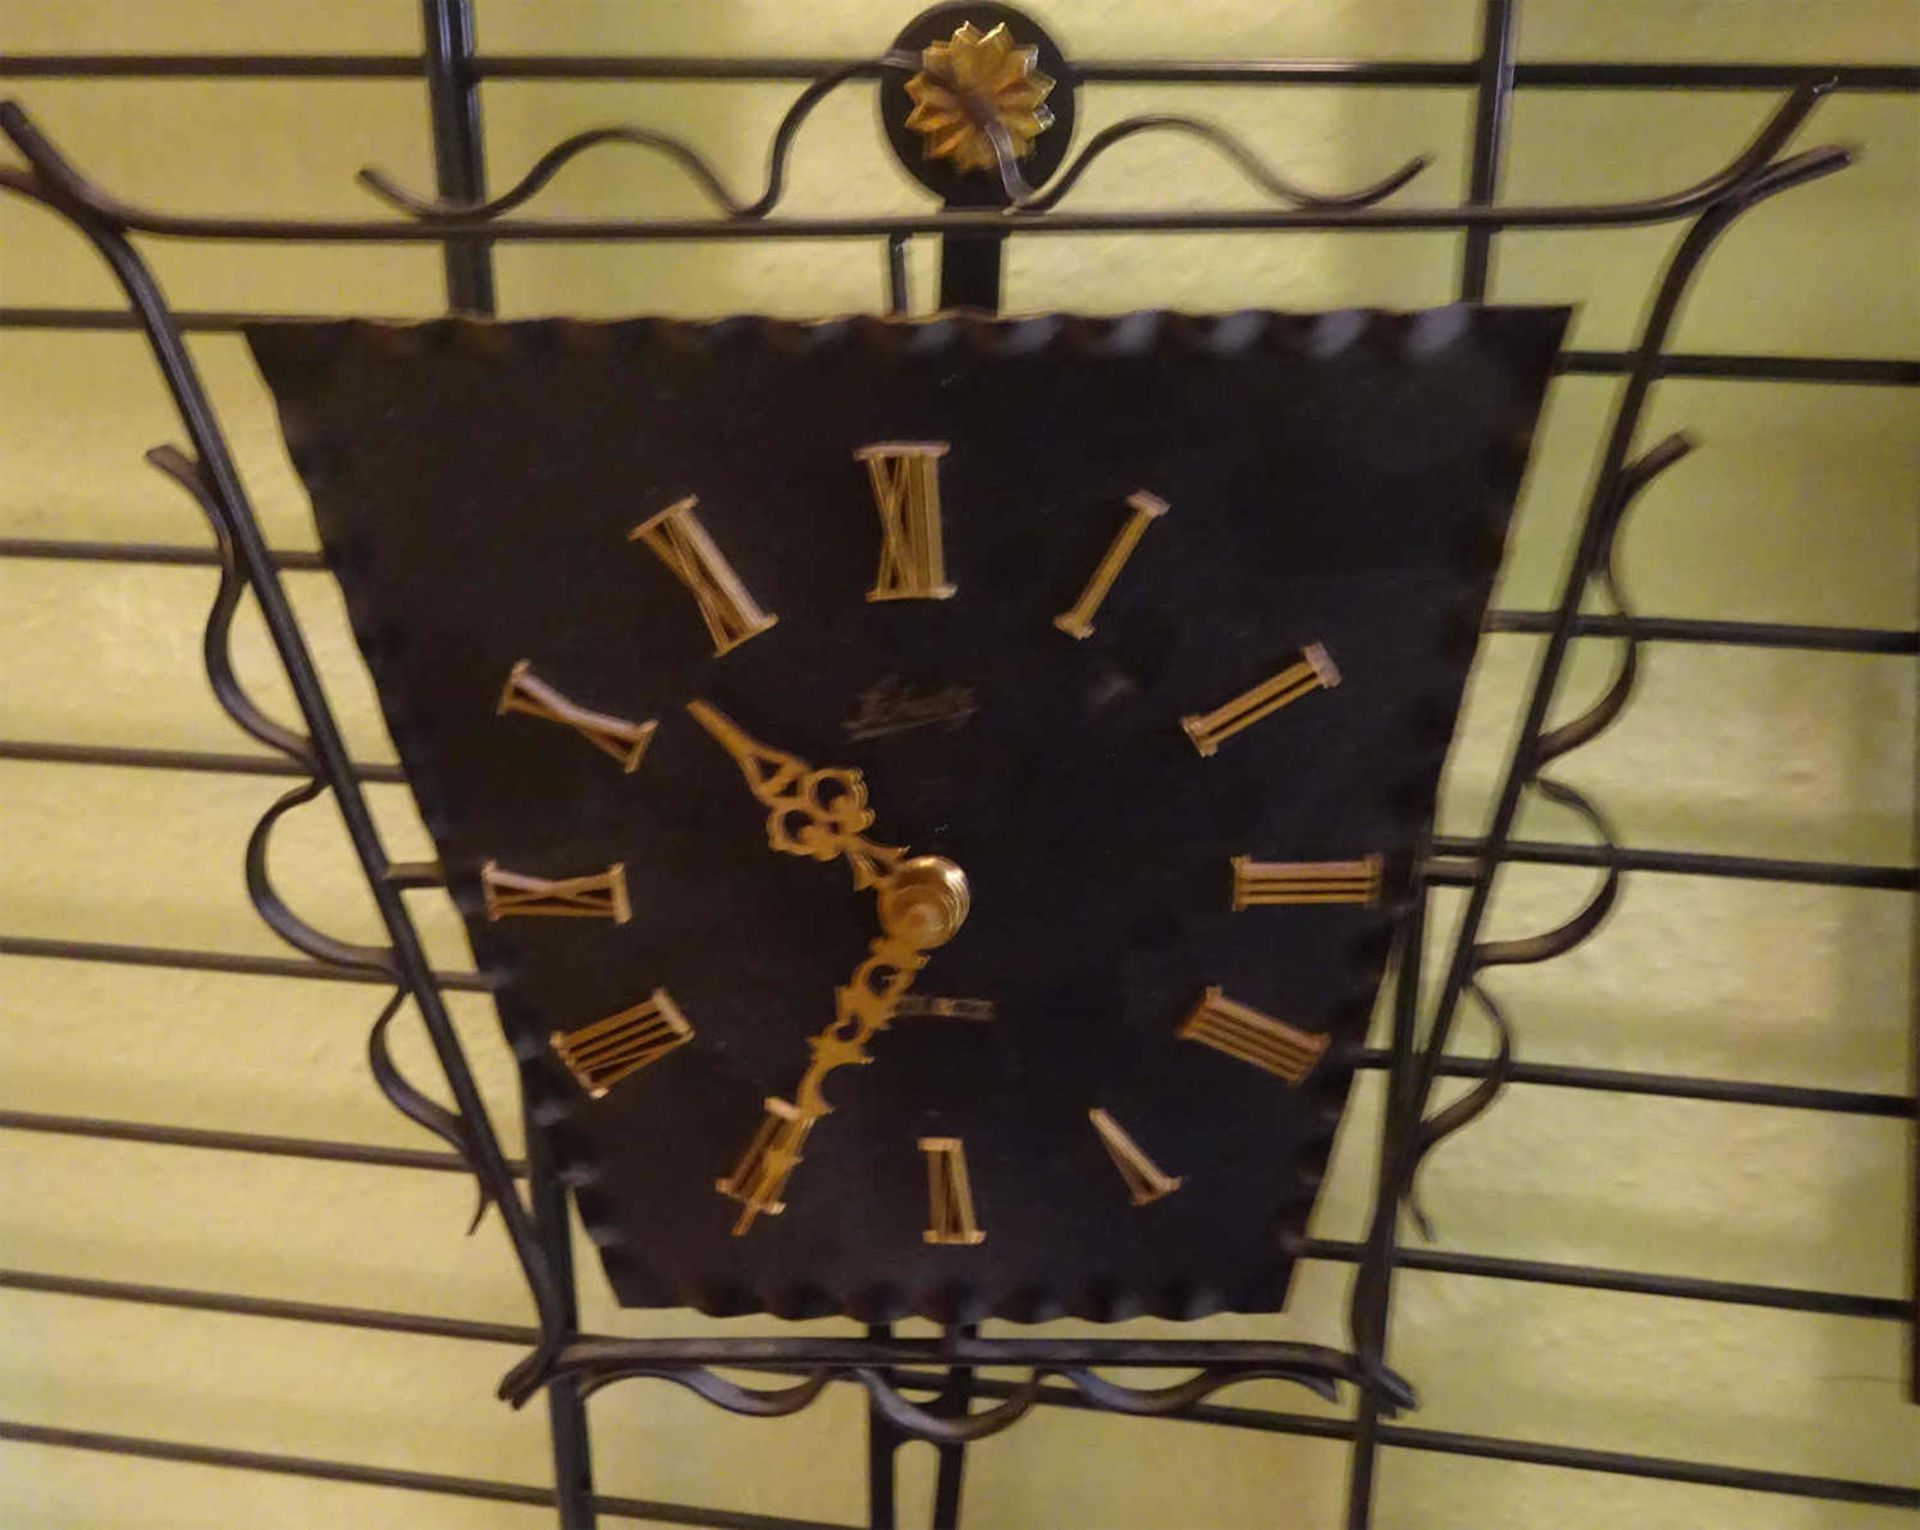 Wanduhr, Marke Schatz, elektrisch. 45 cmWall clock, brand treasure, electric. 45 cm - Bild 2 aus 2